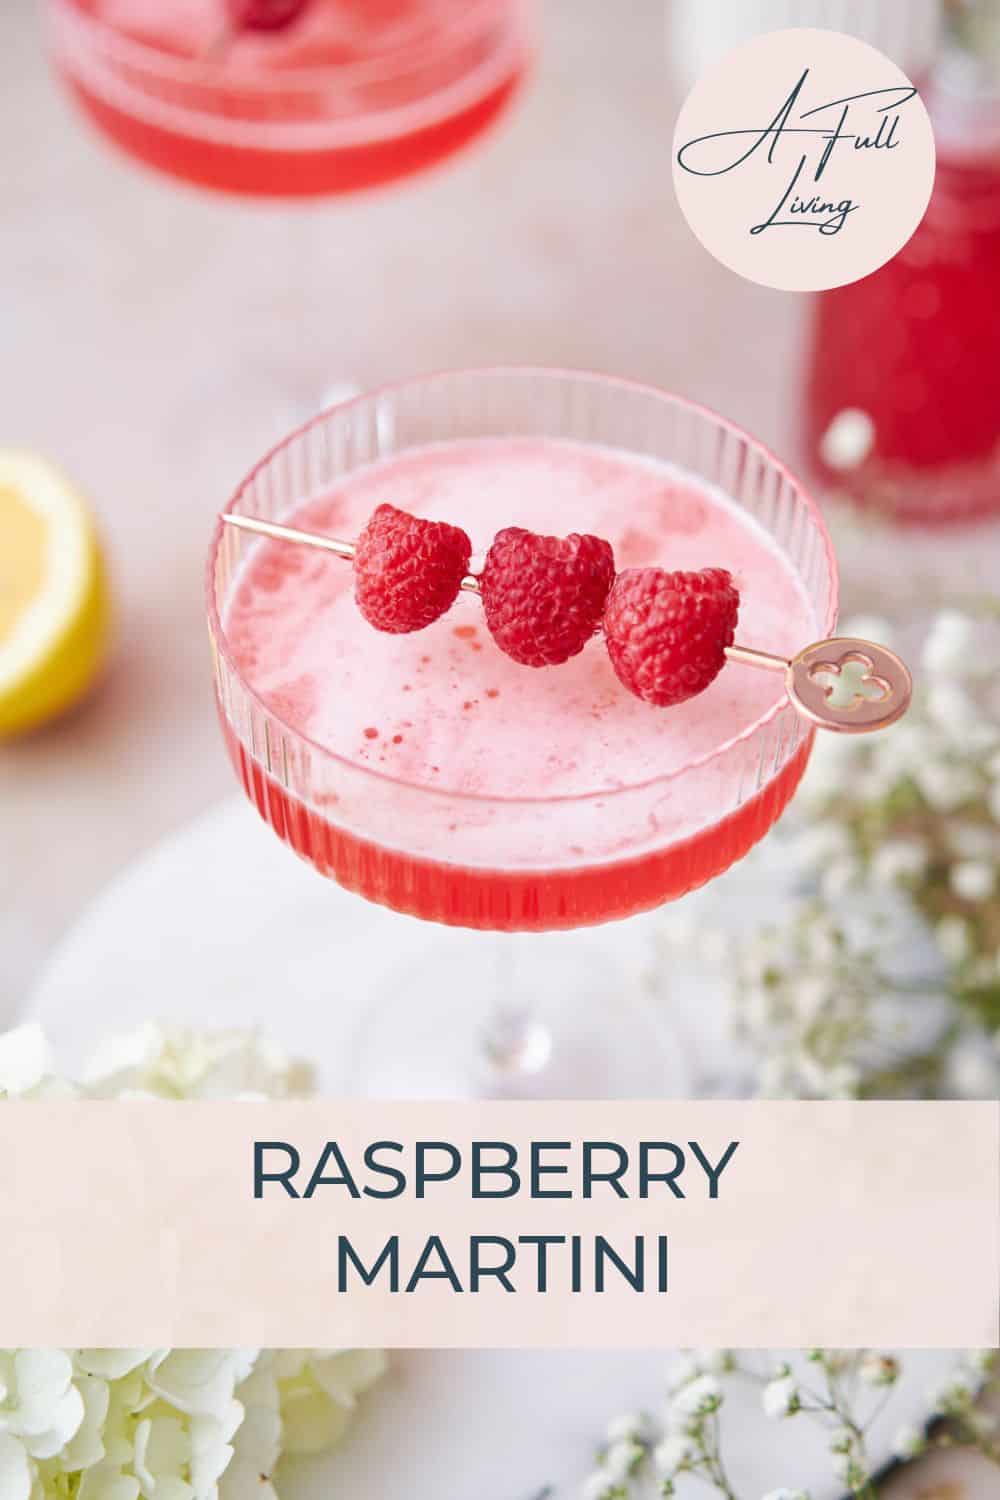 Raspberry martini